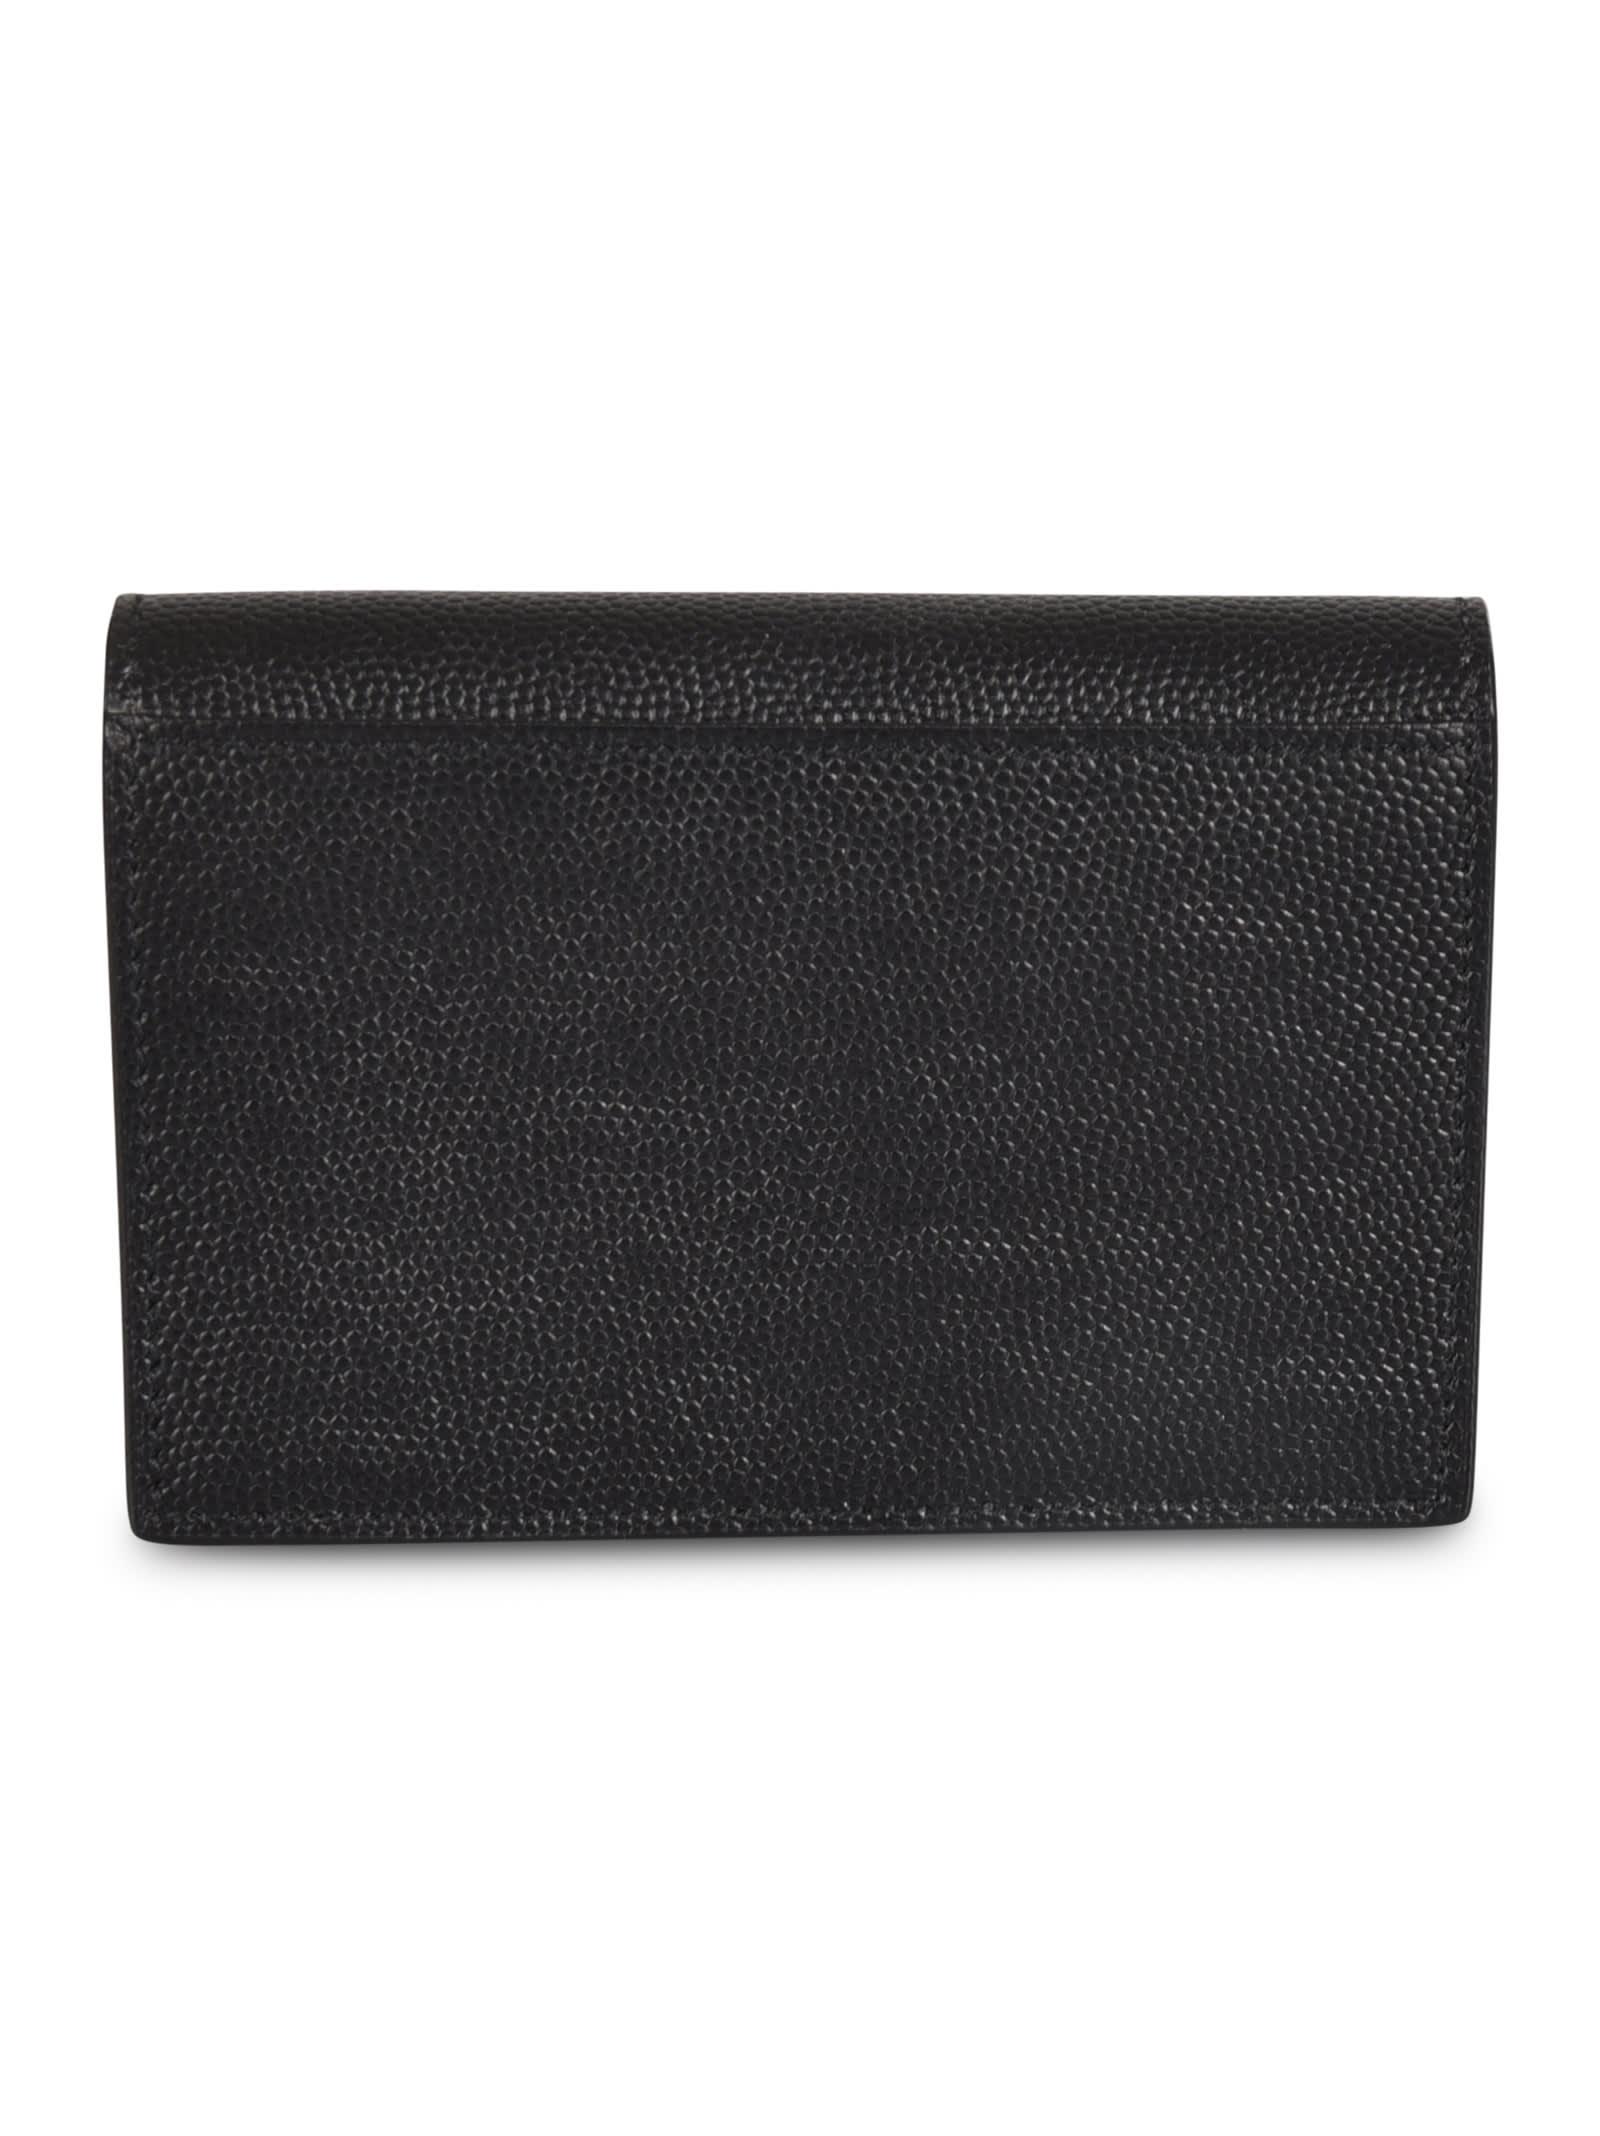 Saint Laurent Snap Button Logo Wallet in Black for Men